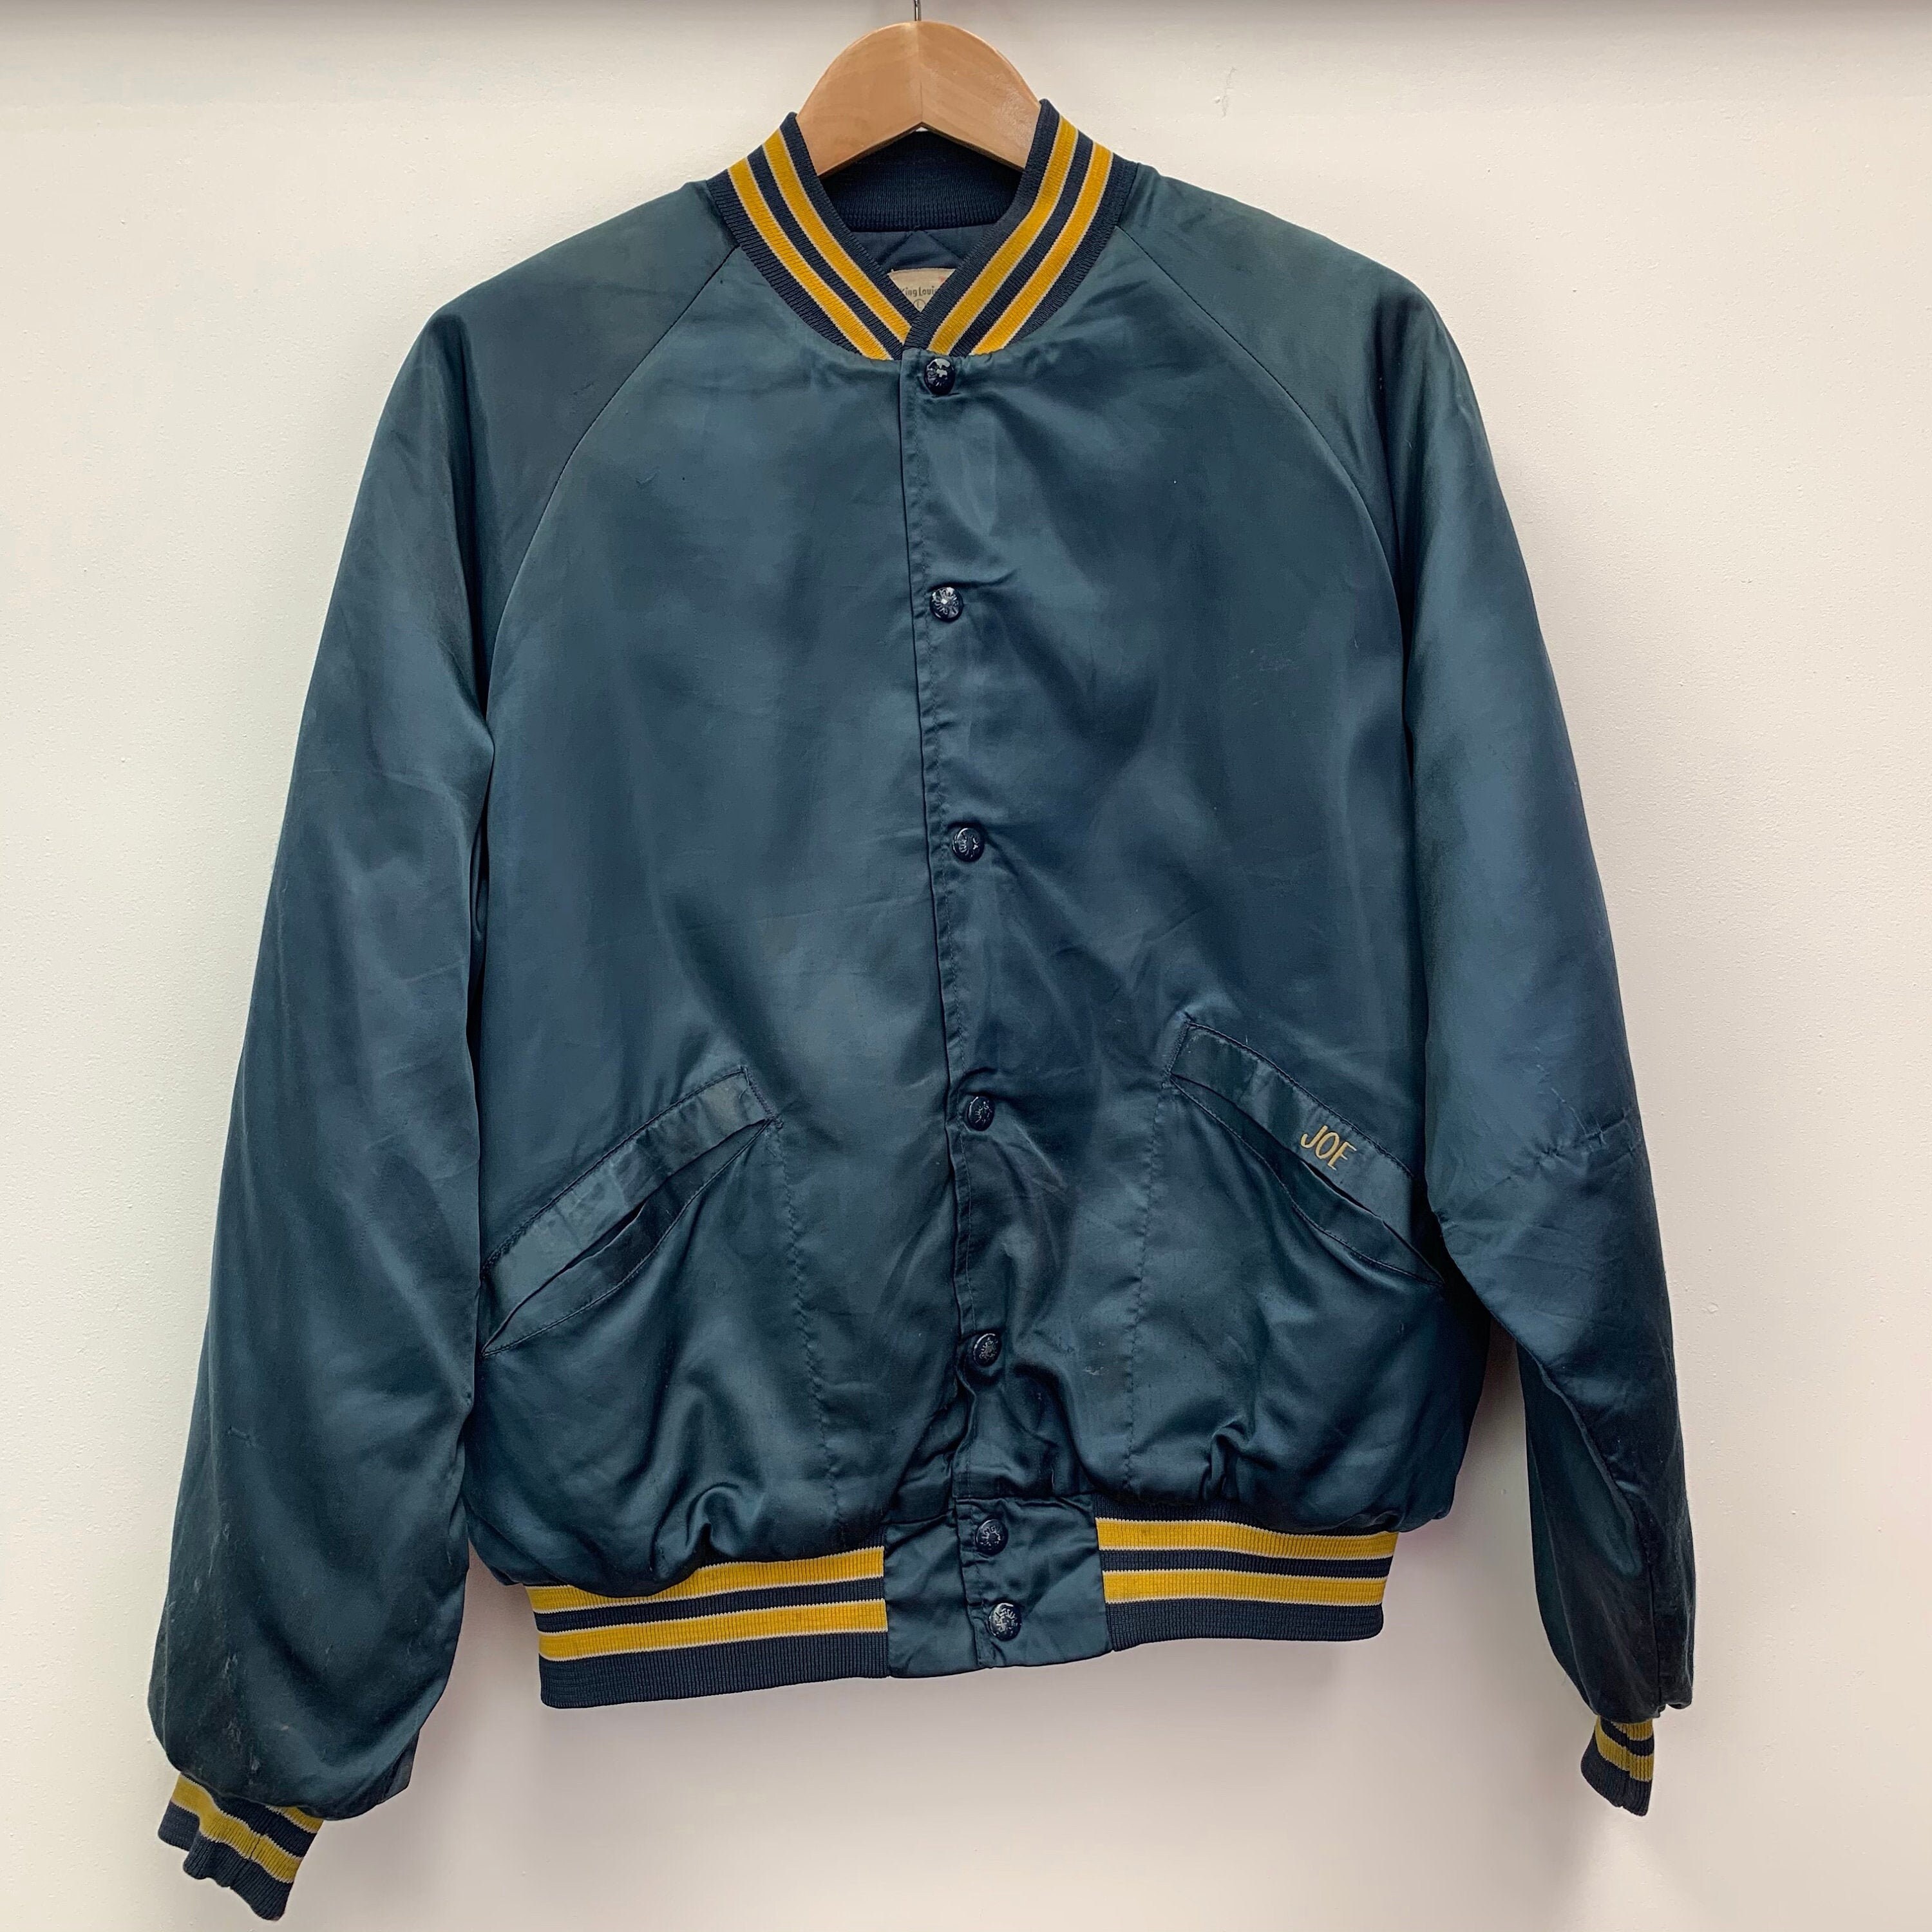 Vintage 1970s King Louie Pro Fit Blue Bomber Jacket | Etsy